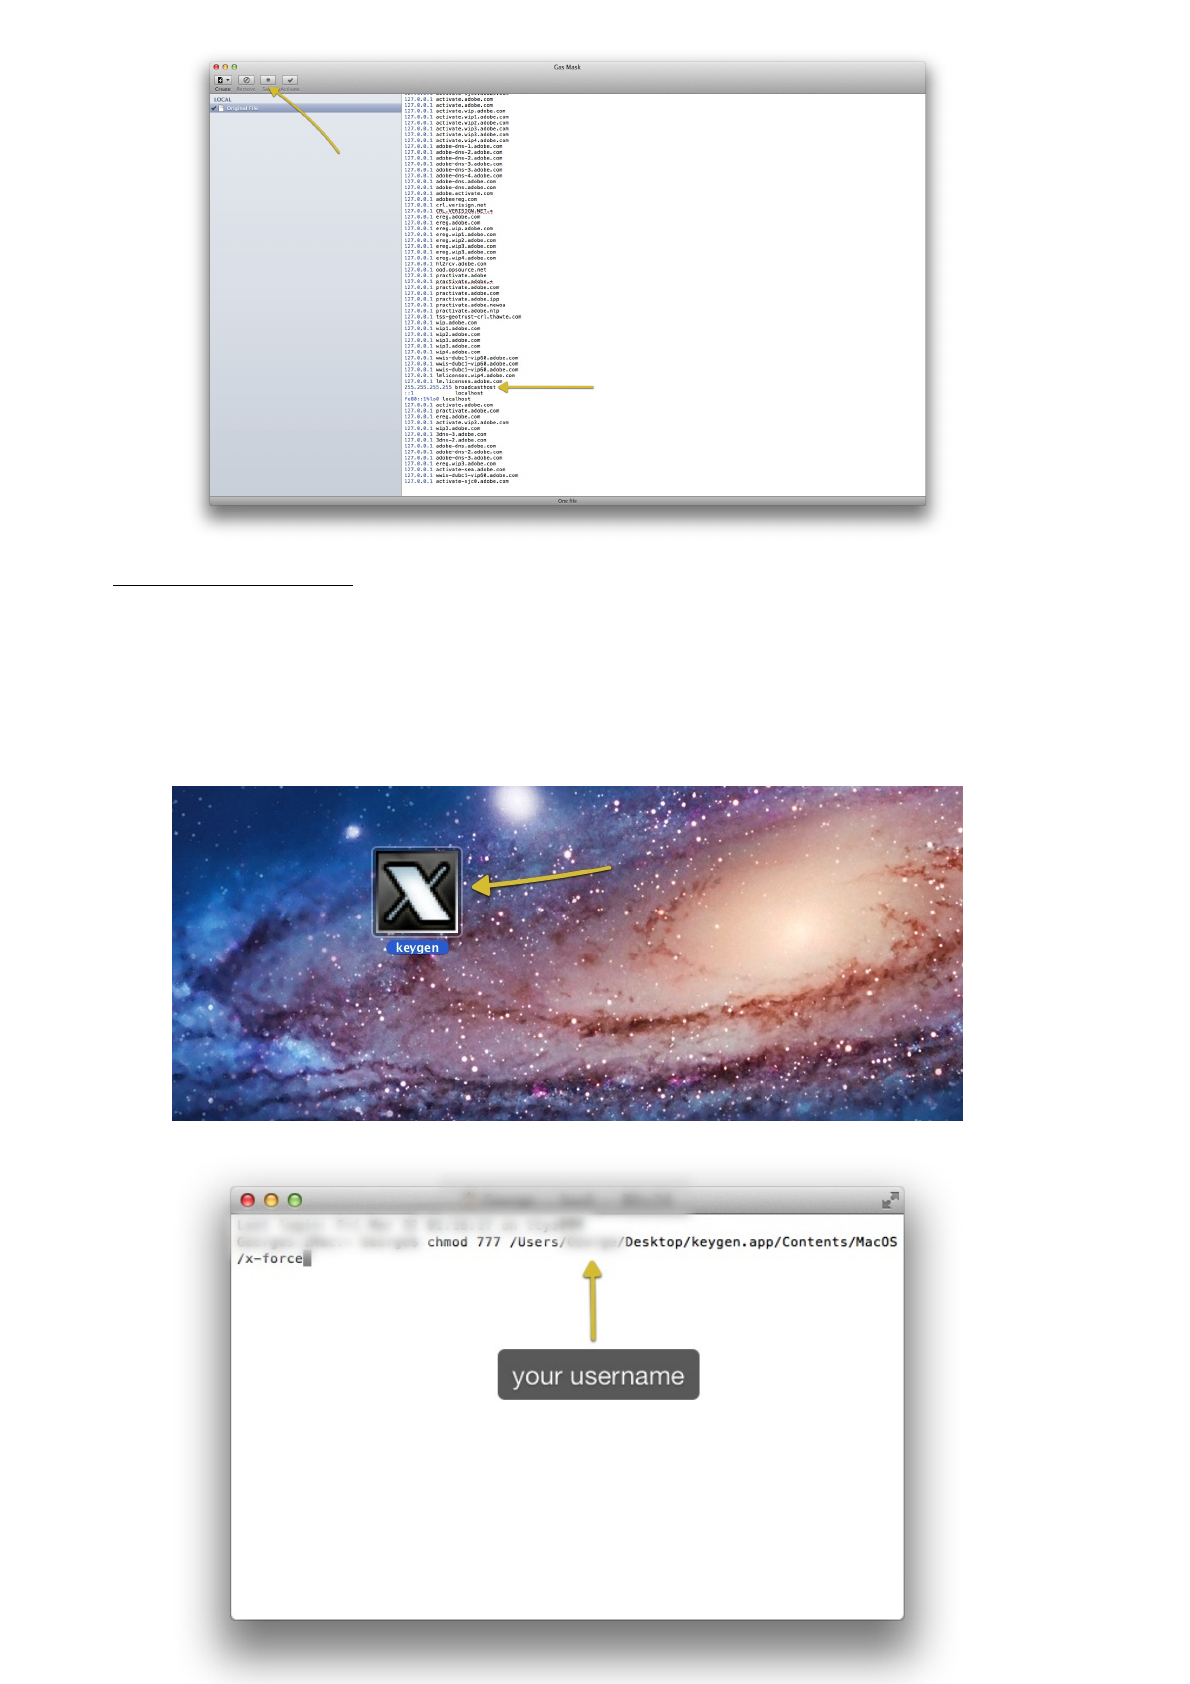 adobe creative suite 6 torrent for mac